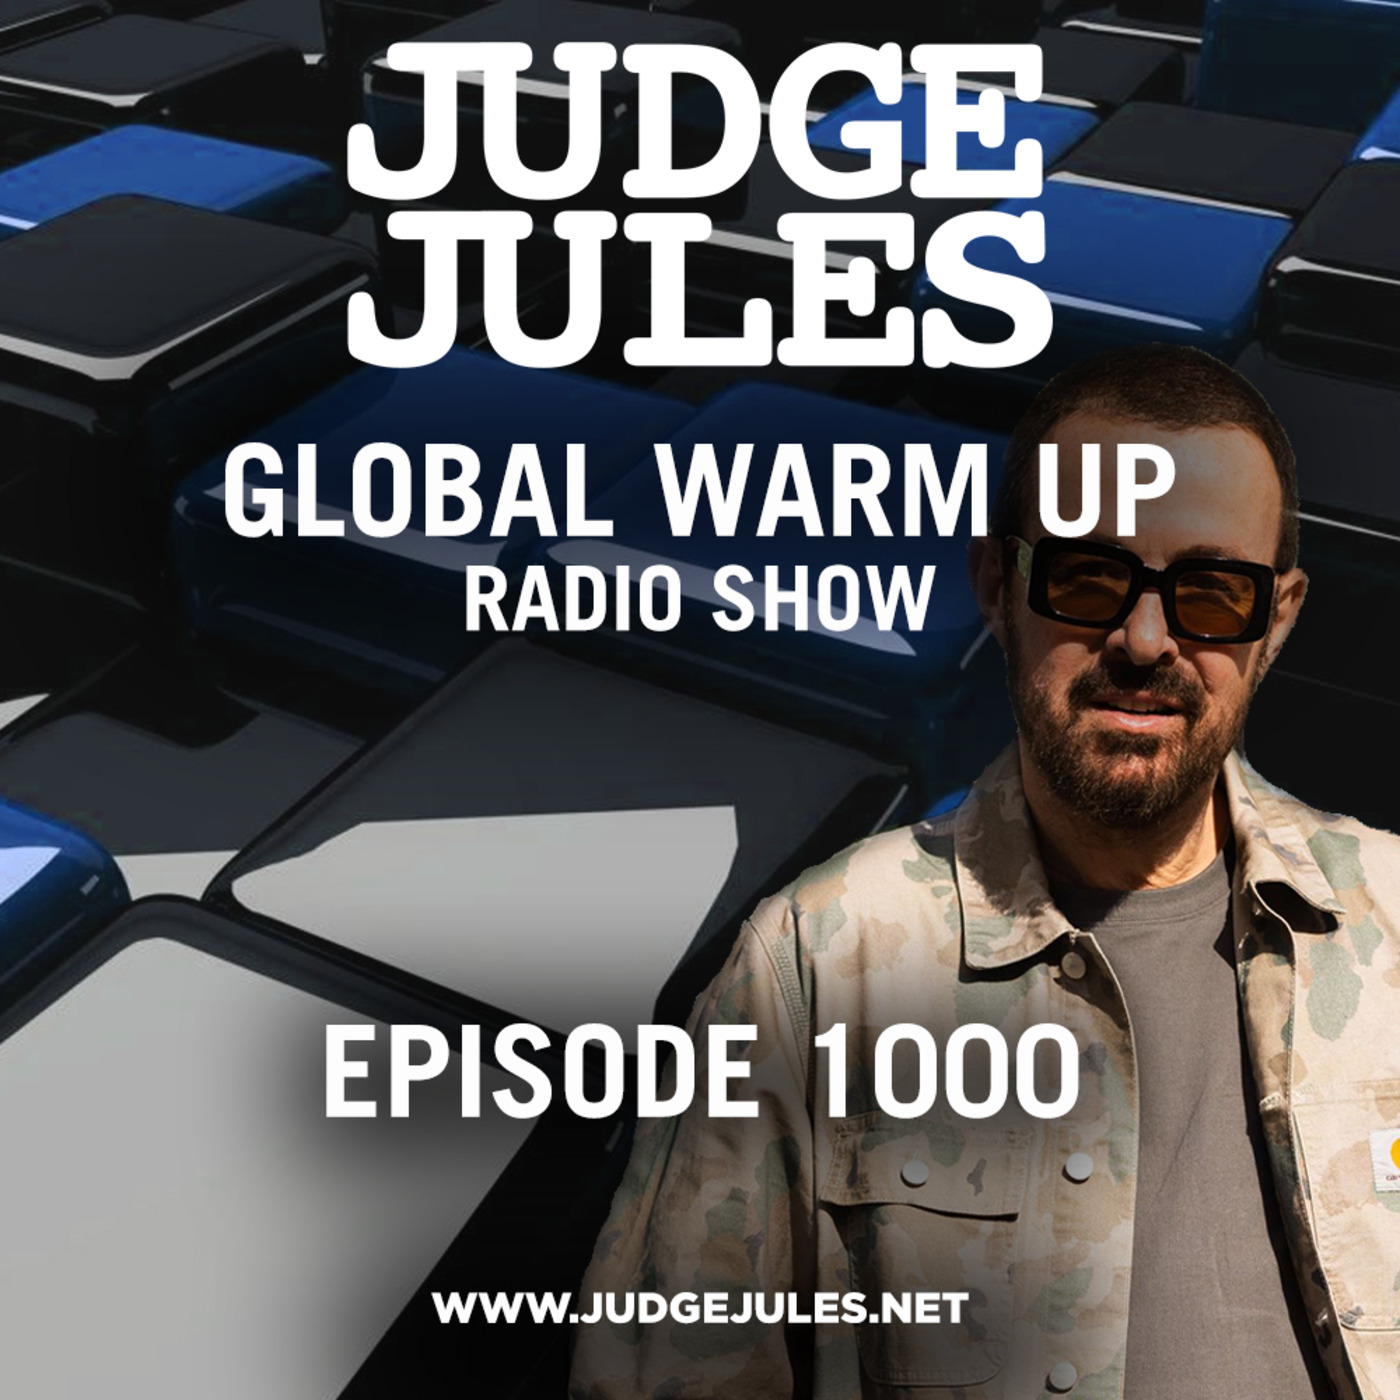 Episode 1000: JUDGE JULES PRESENTS THE GLOBAL WARM UP EPISODE 1000